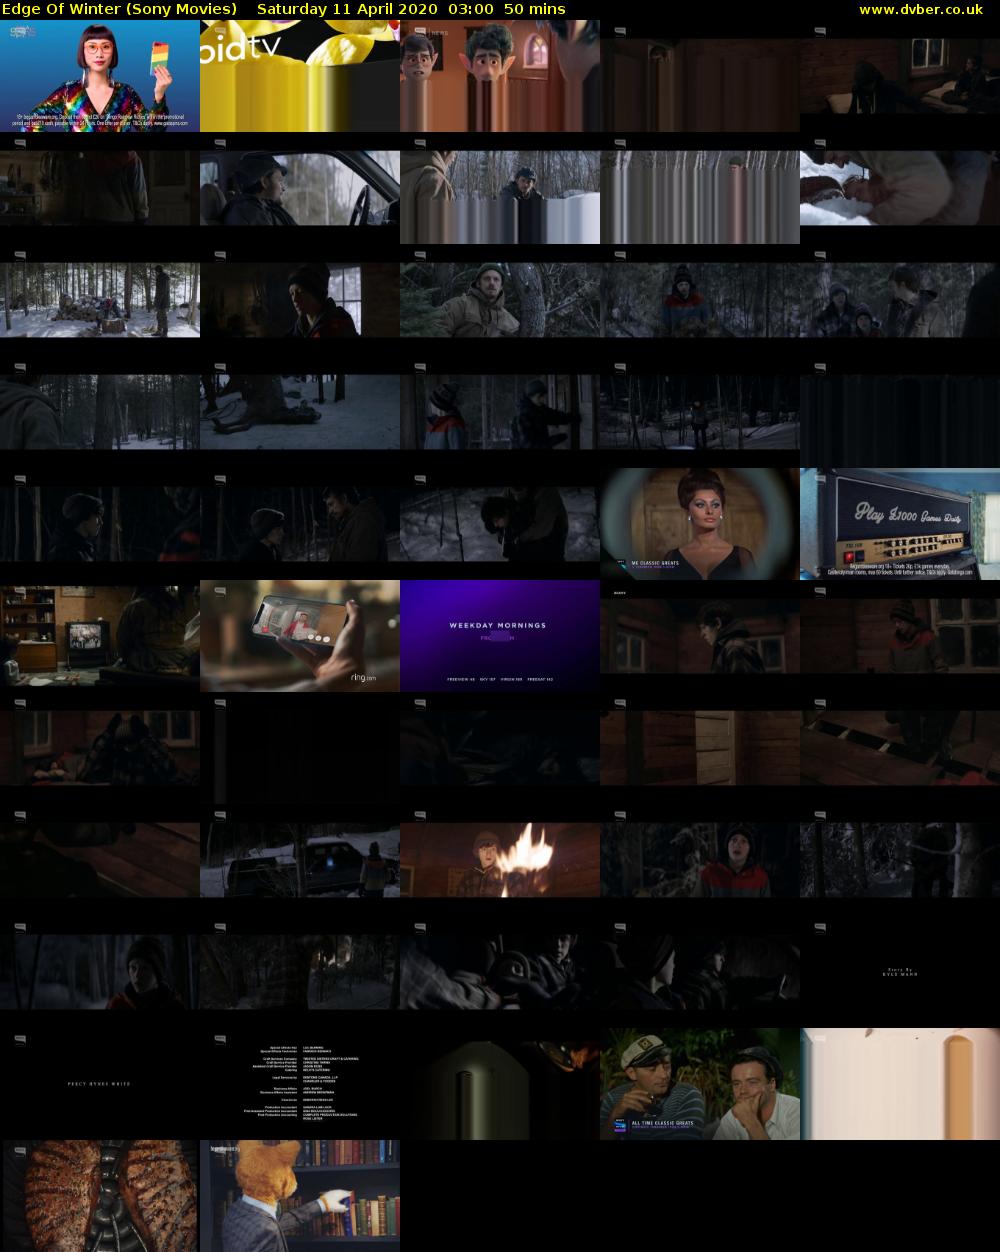 Edge Of Winter (Sony Movies) Saturday 11 April 2020 03:00 - 03:50